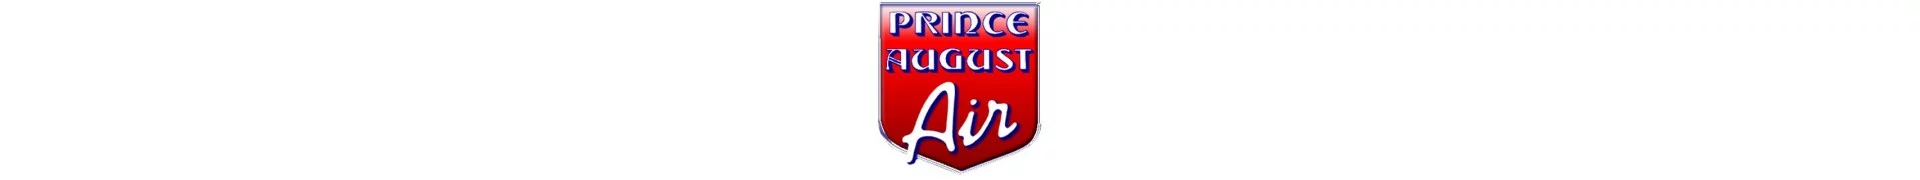 Prince August Airbrushfarben